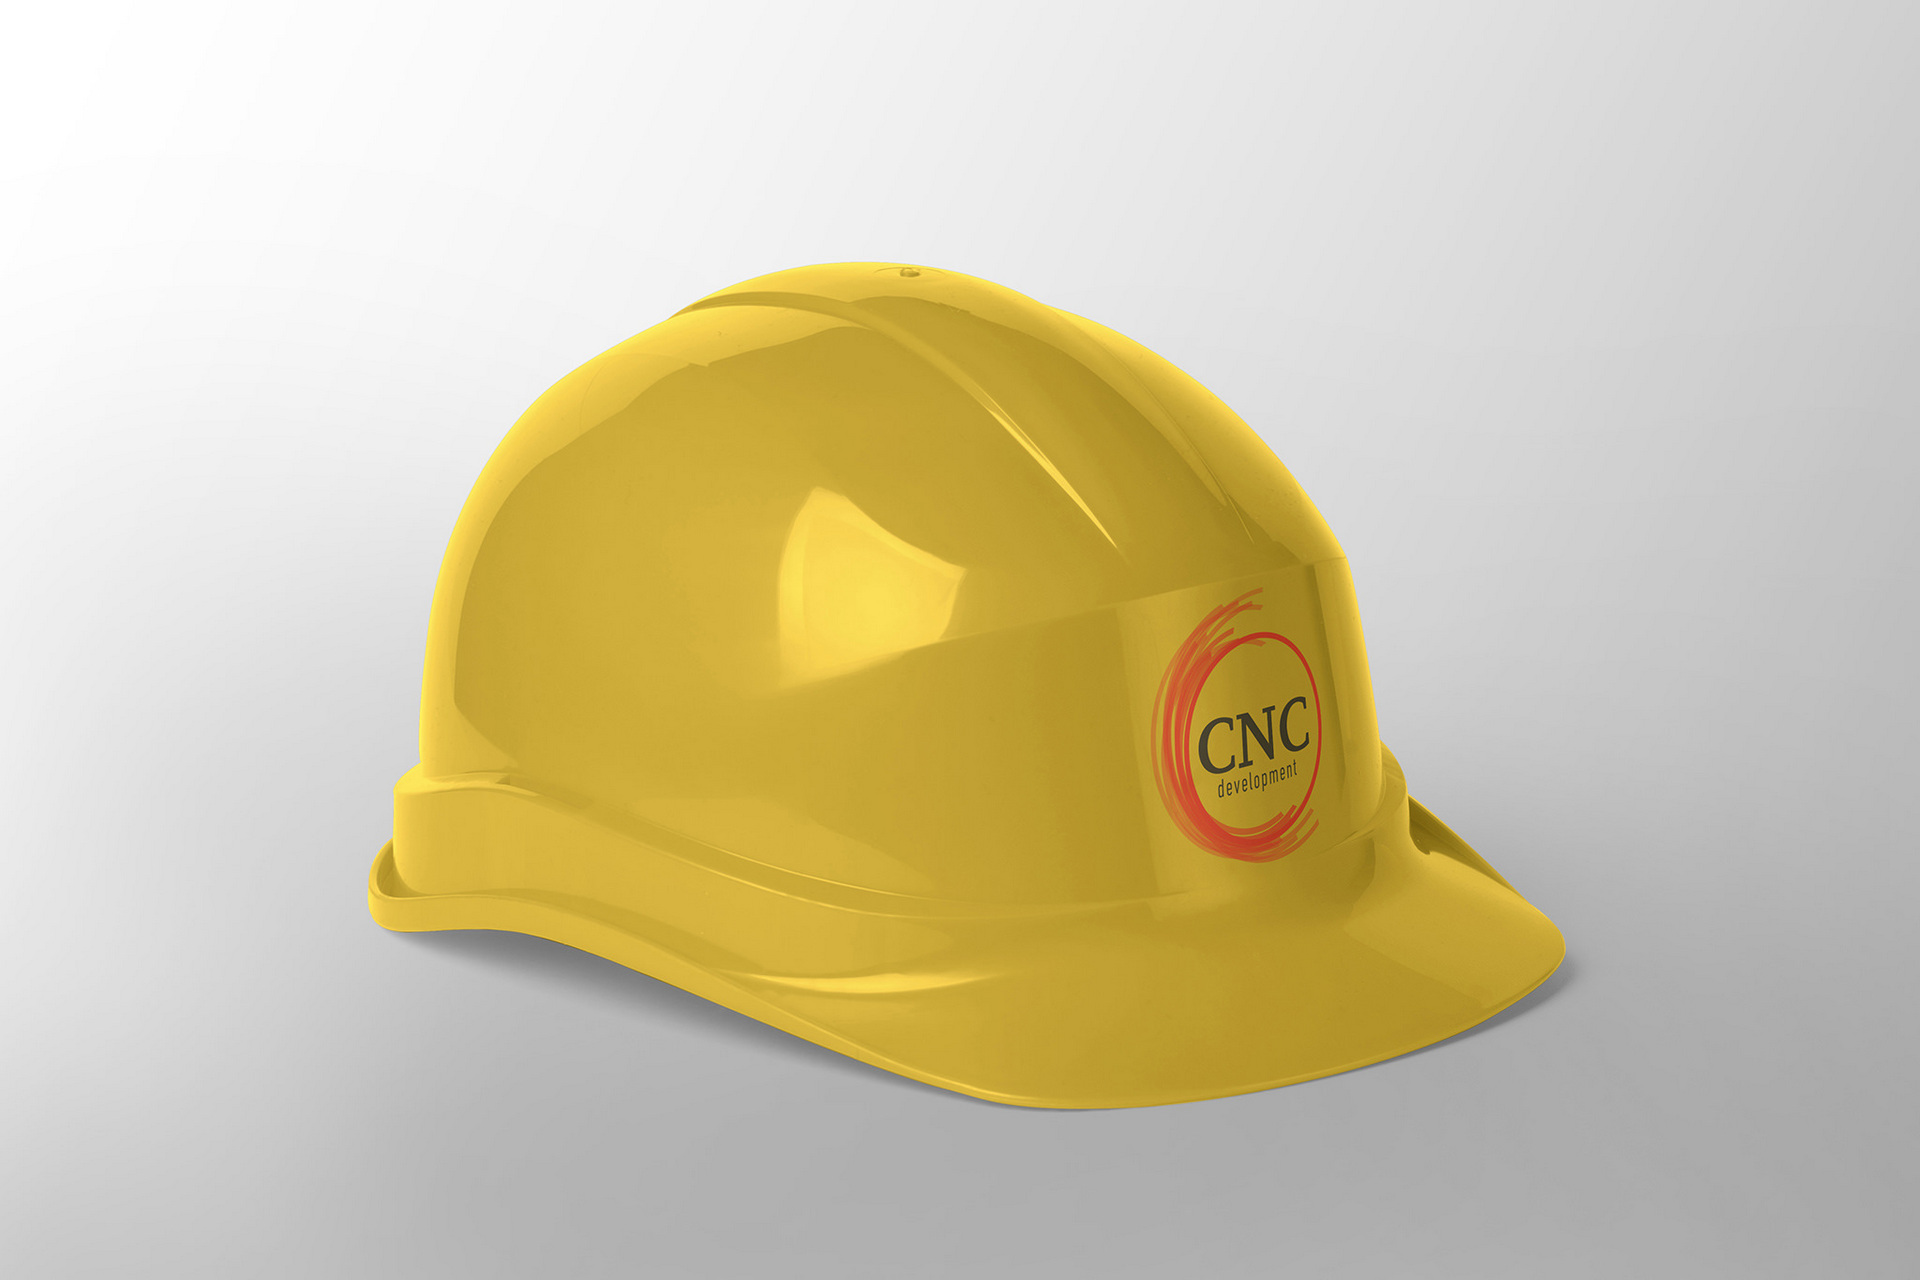 Cnc logo helmet